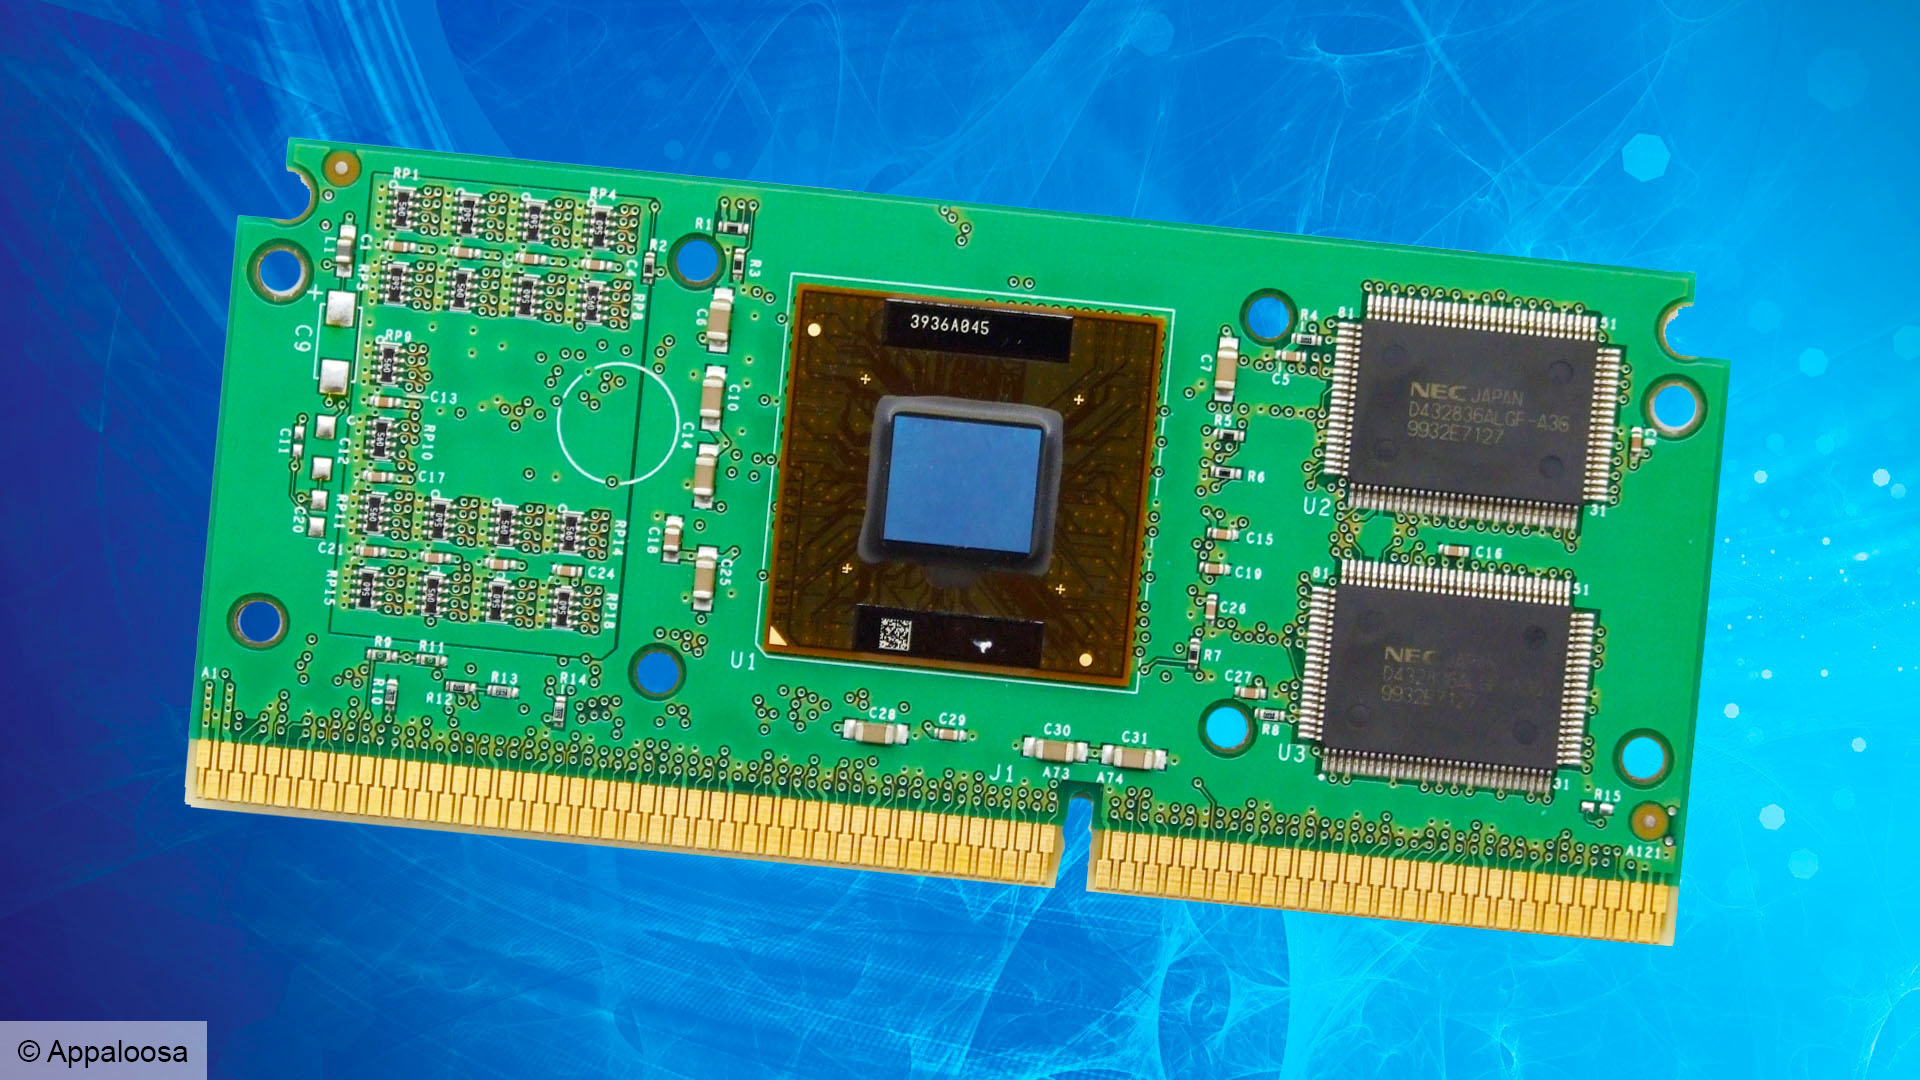 AMD Athlon K7: Intel Pentium III Katmai Slot 1 CPU